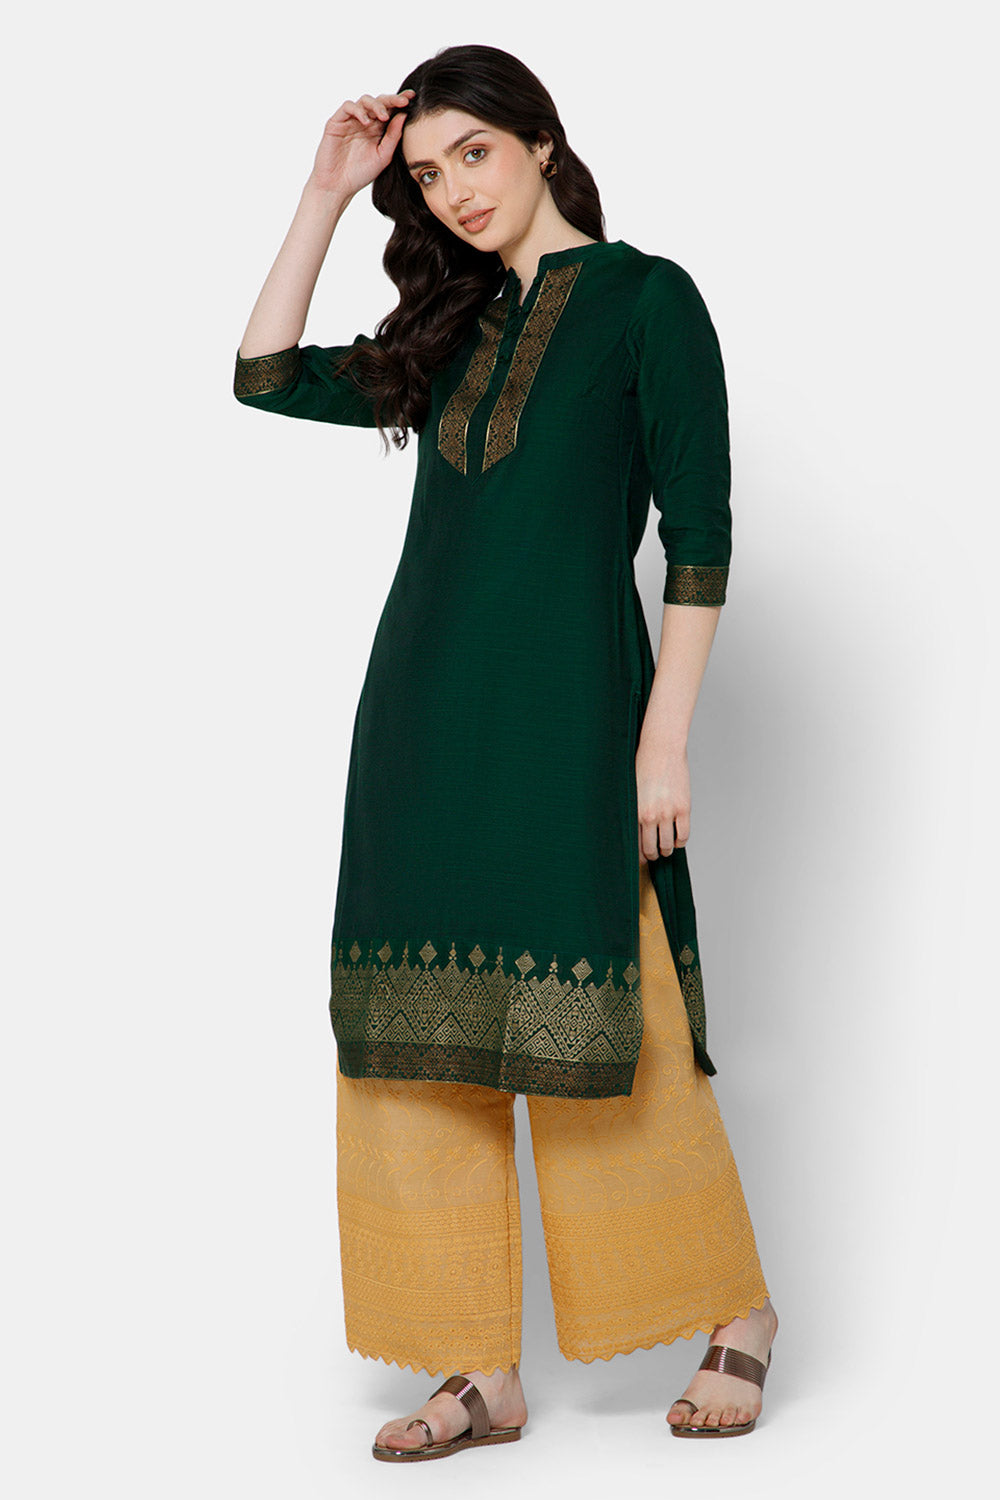 Mythri Women's Ethnic Wear Straight kurta - Green - KU53